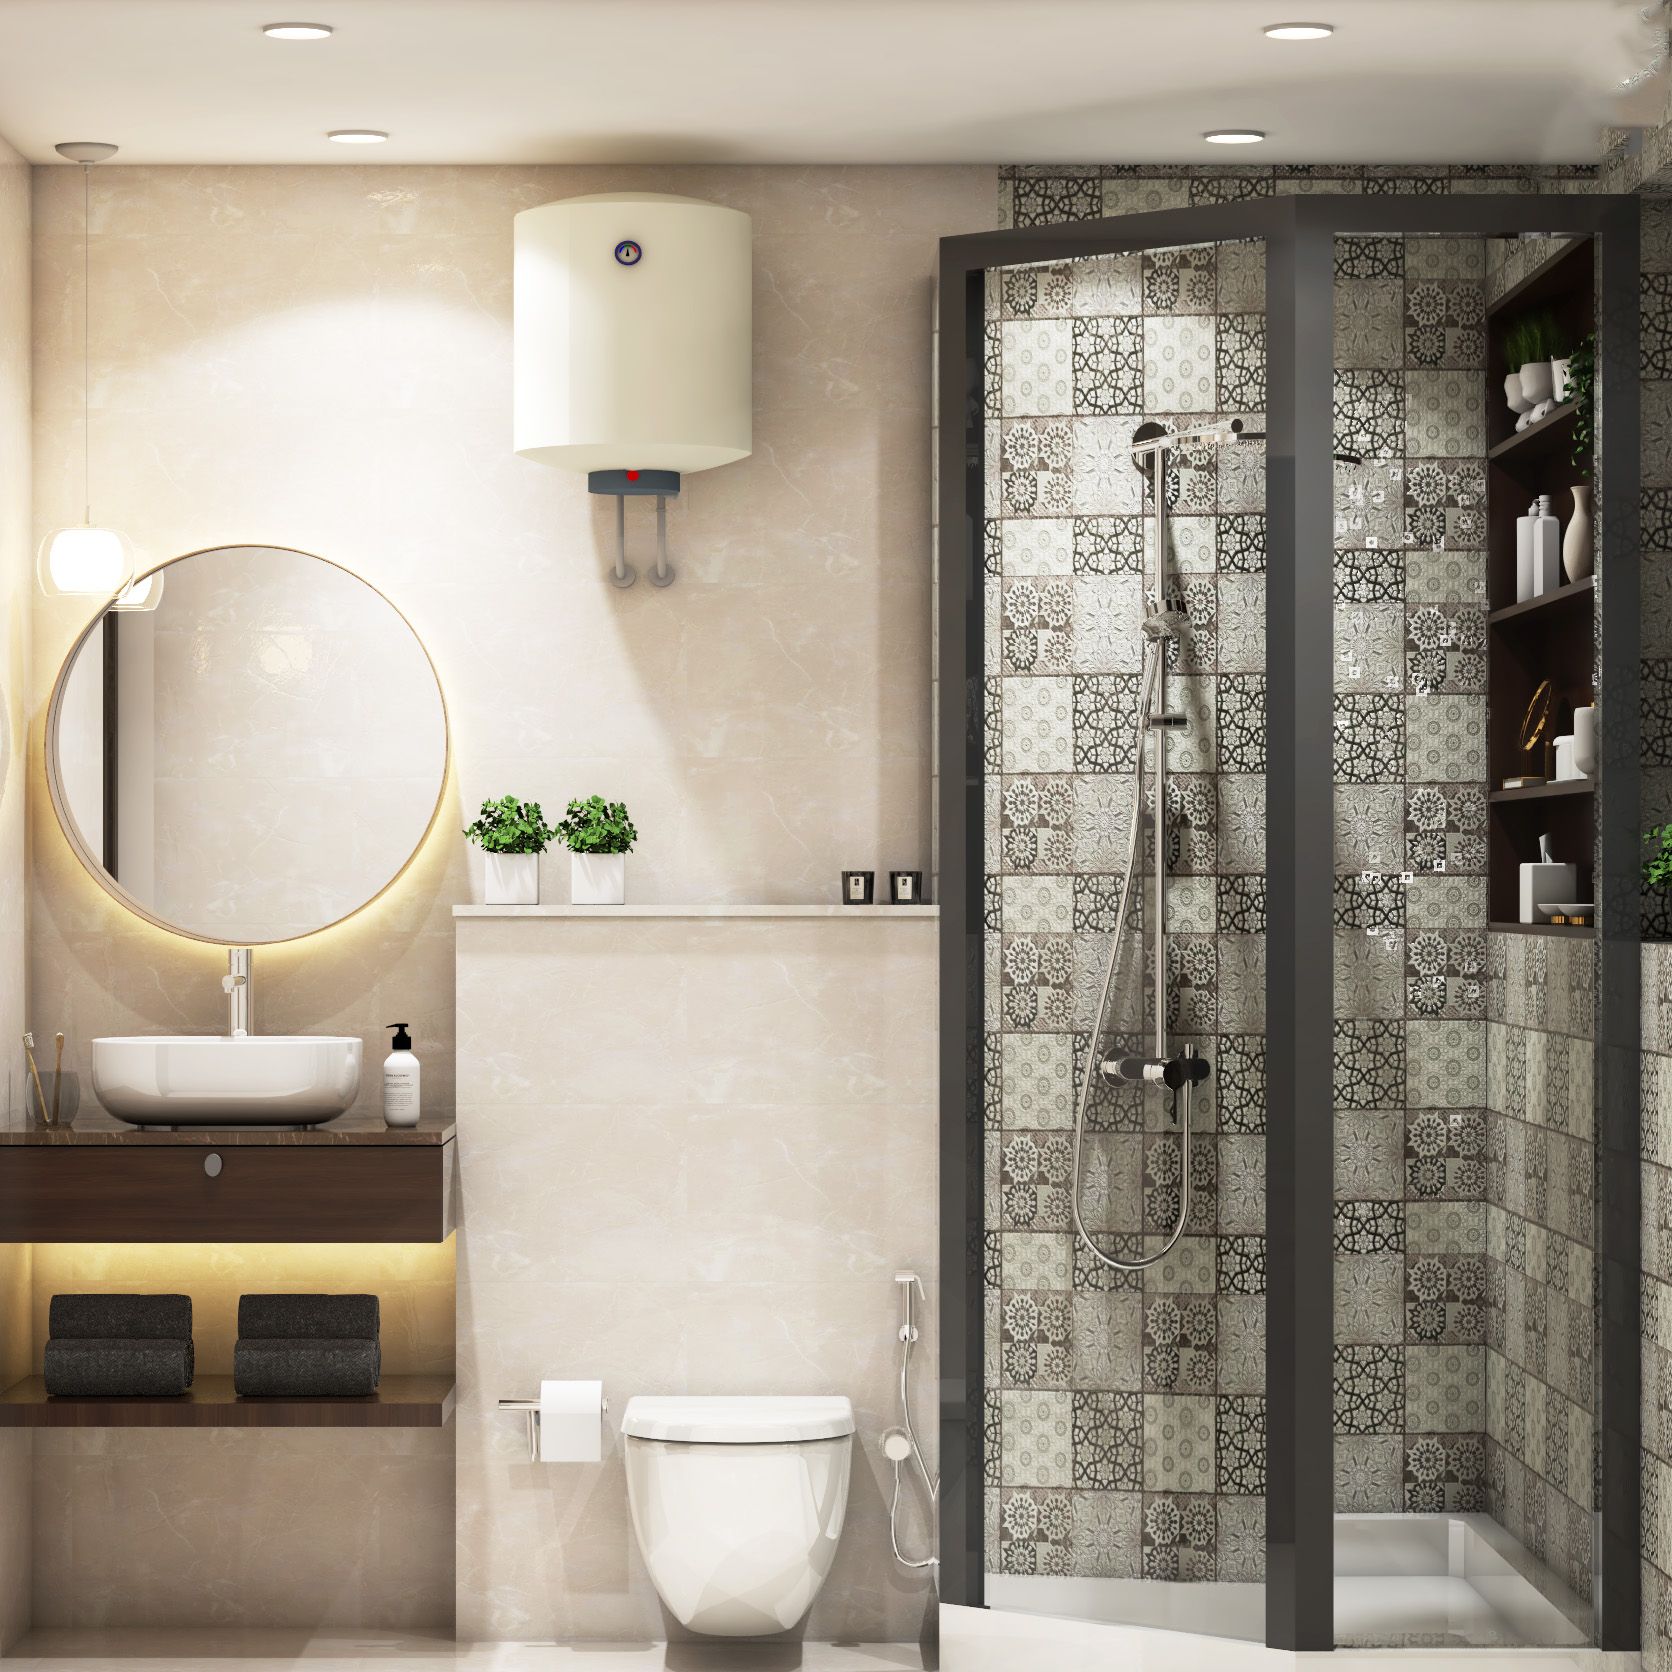 + Modern Bathroom Interior Design Ideas,Images & Inspiration in